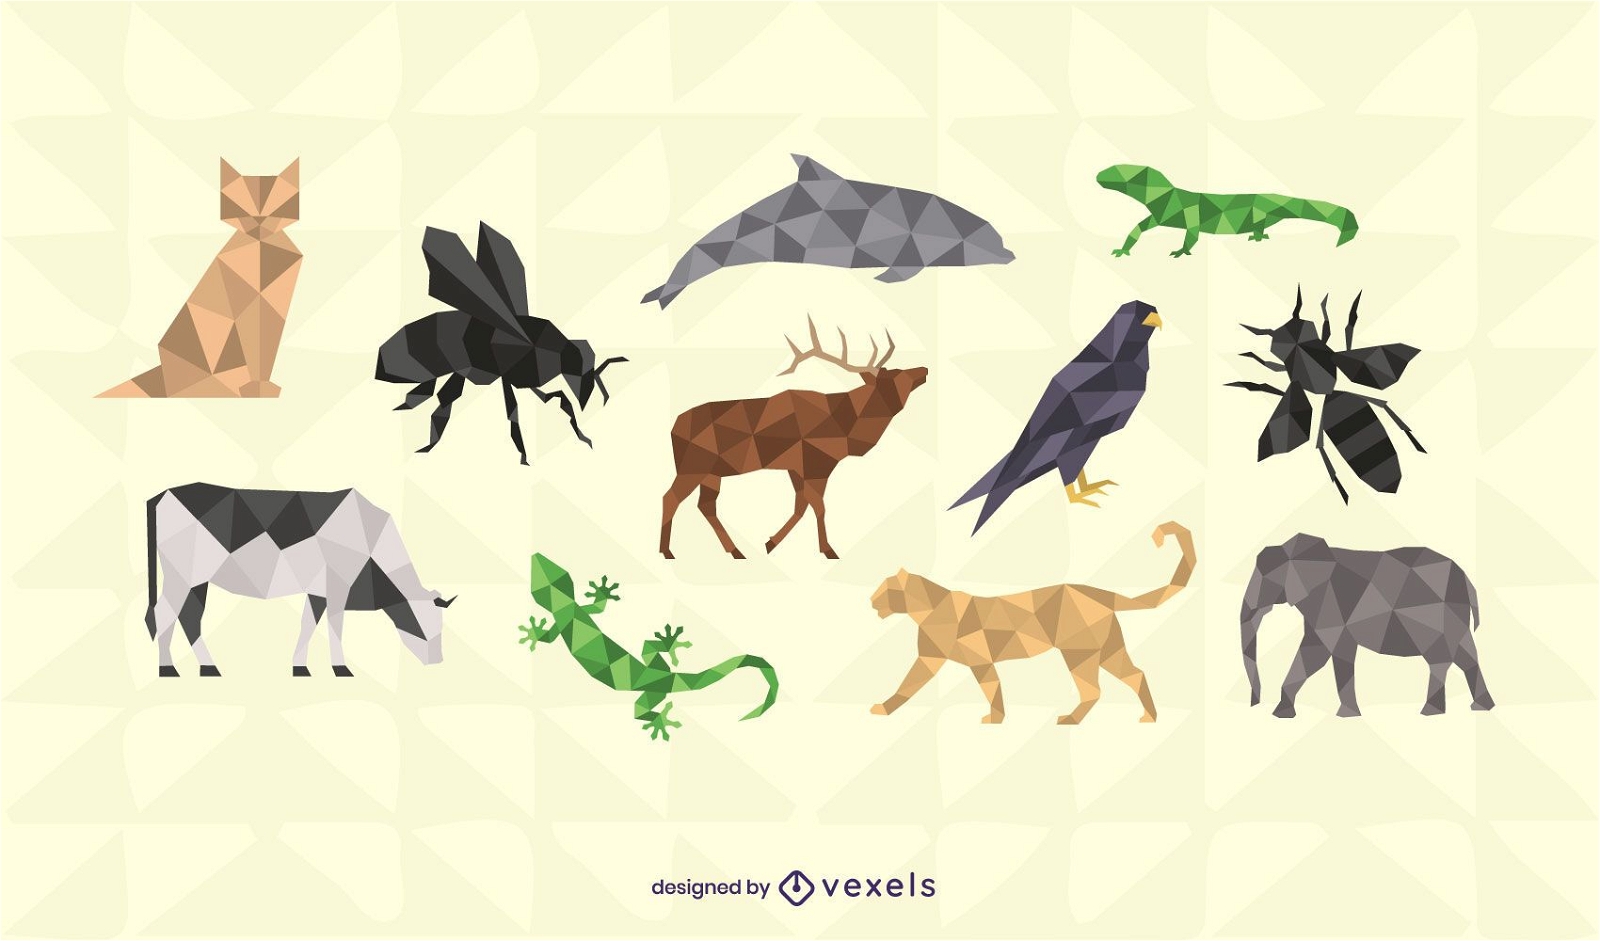 Polygonal animals design set